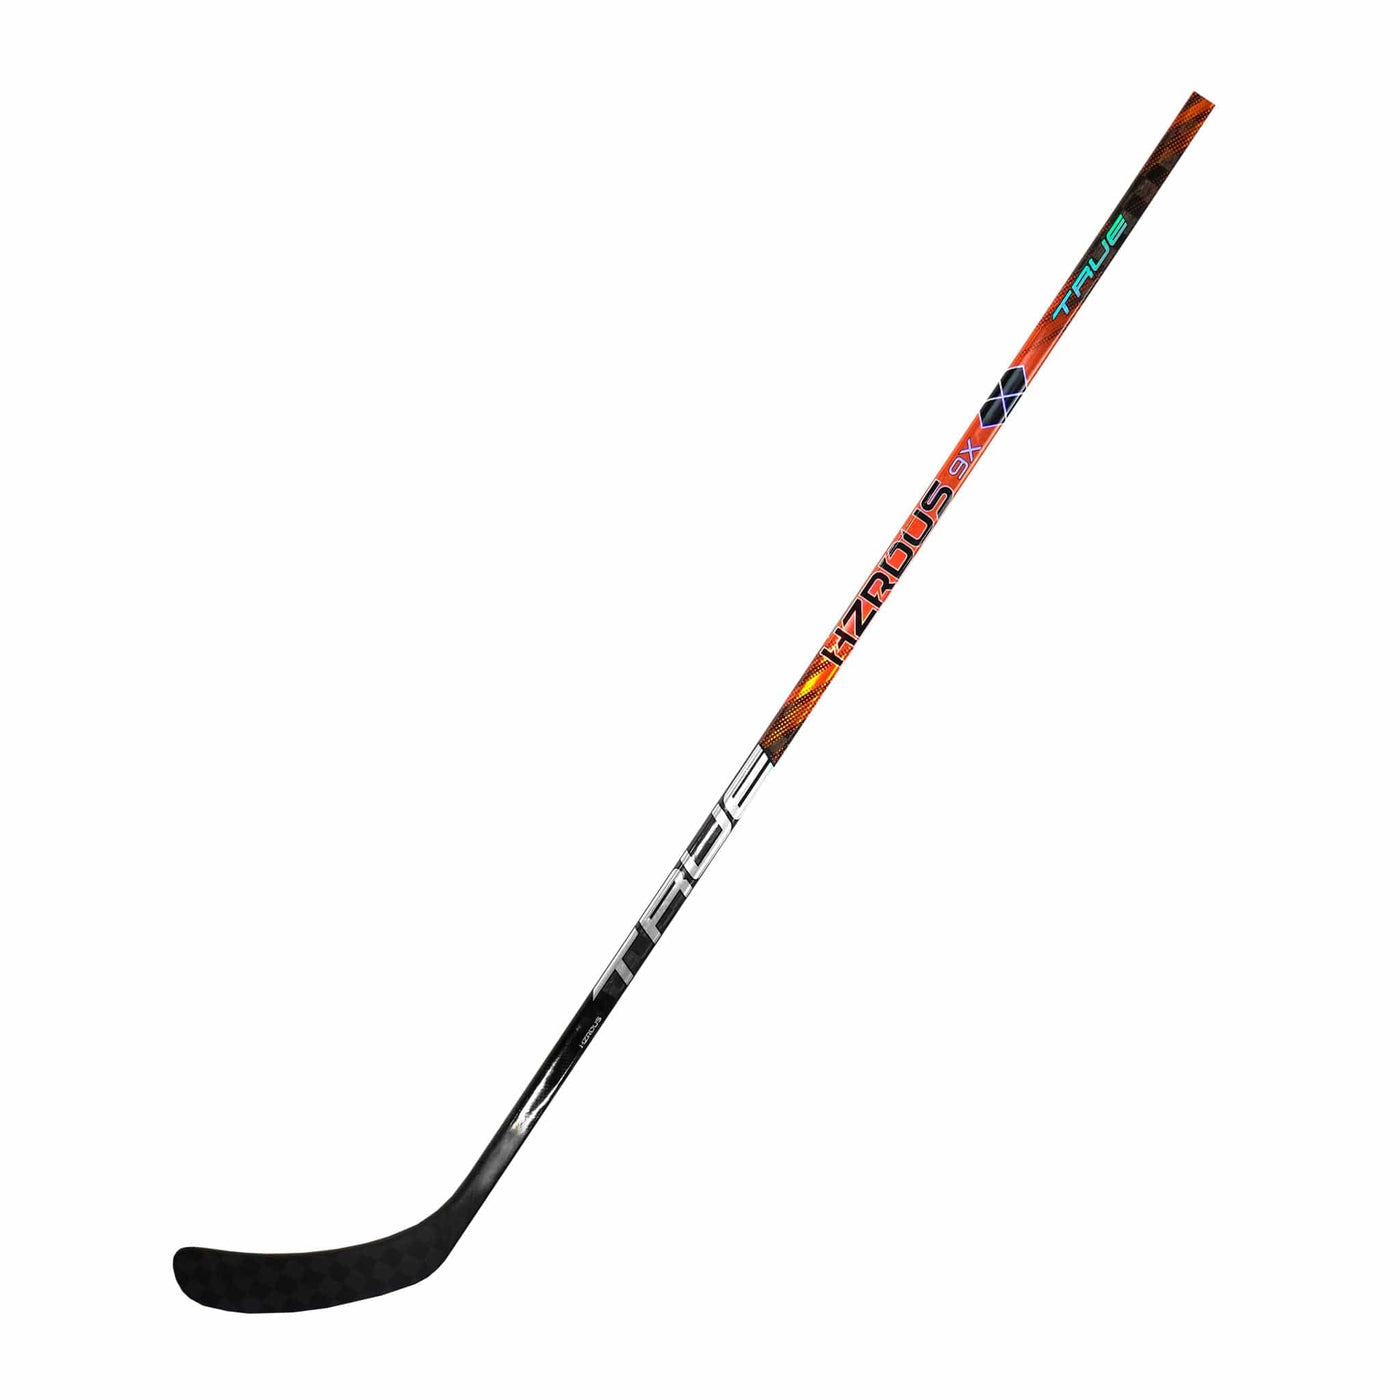 TRUE HZRDUS 9X Intermediate Hockey Stick - TheHockeyShop.com